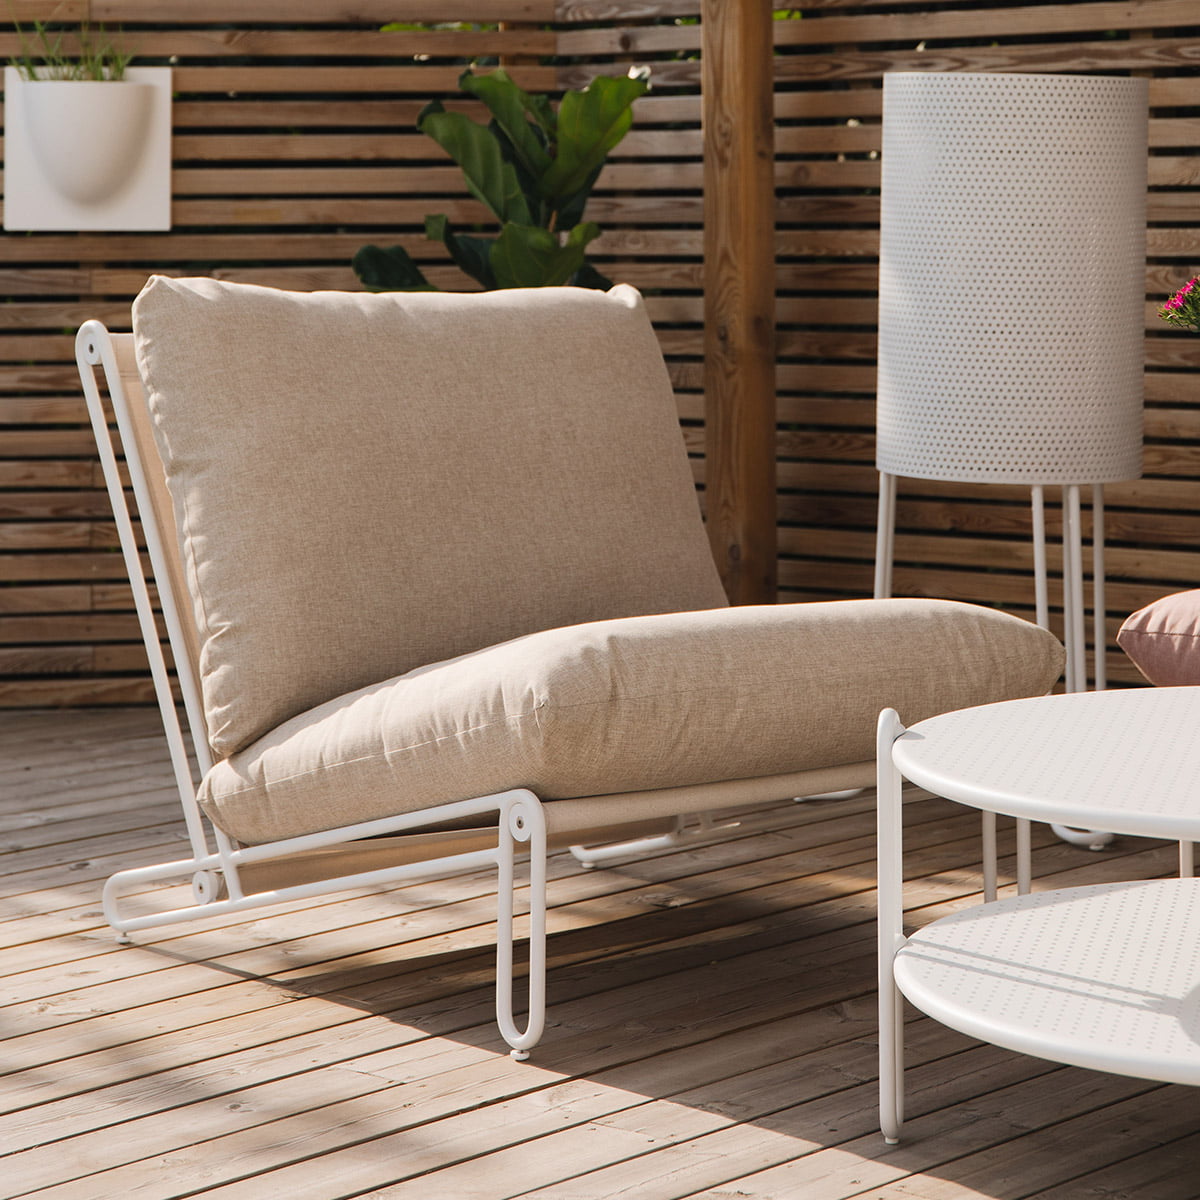 Moderne, byggbar sofa/stol i loungestil med aluminiumsstamme og sete i textilene.